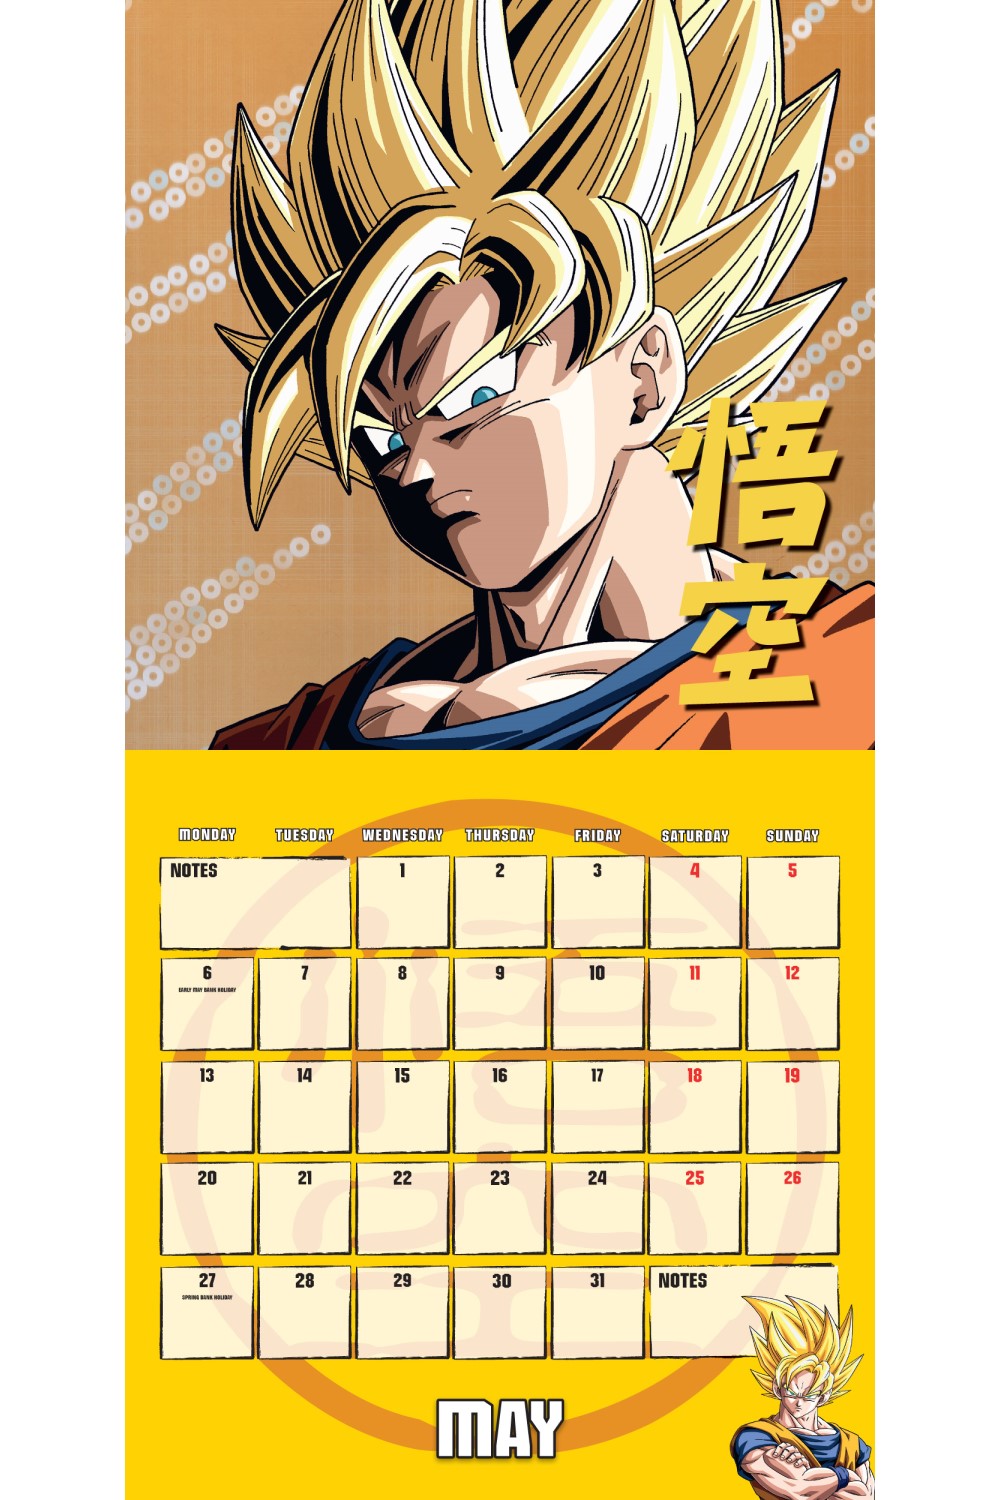 2023 Dragon Ball Z - Square Wall Calendar